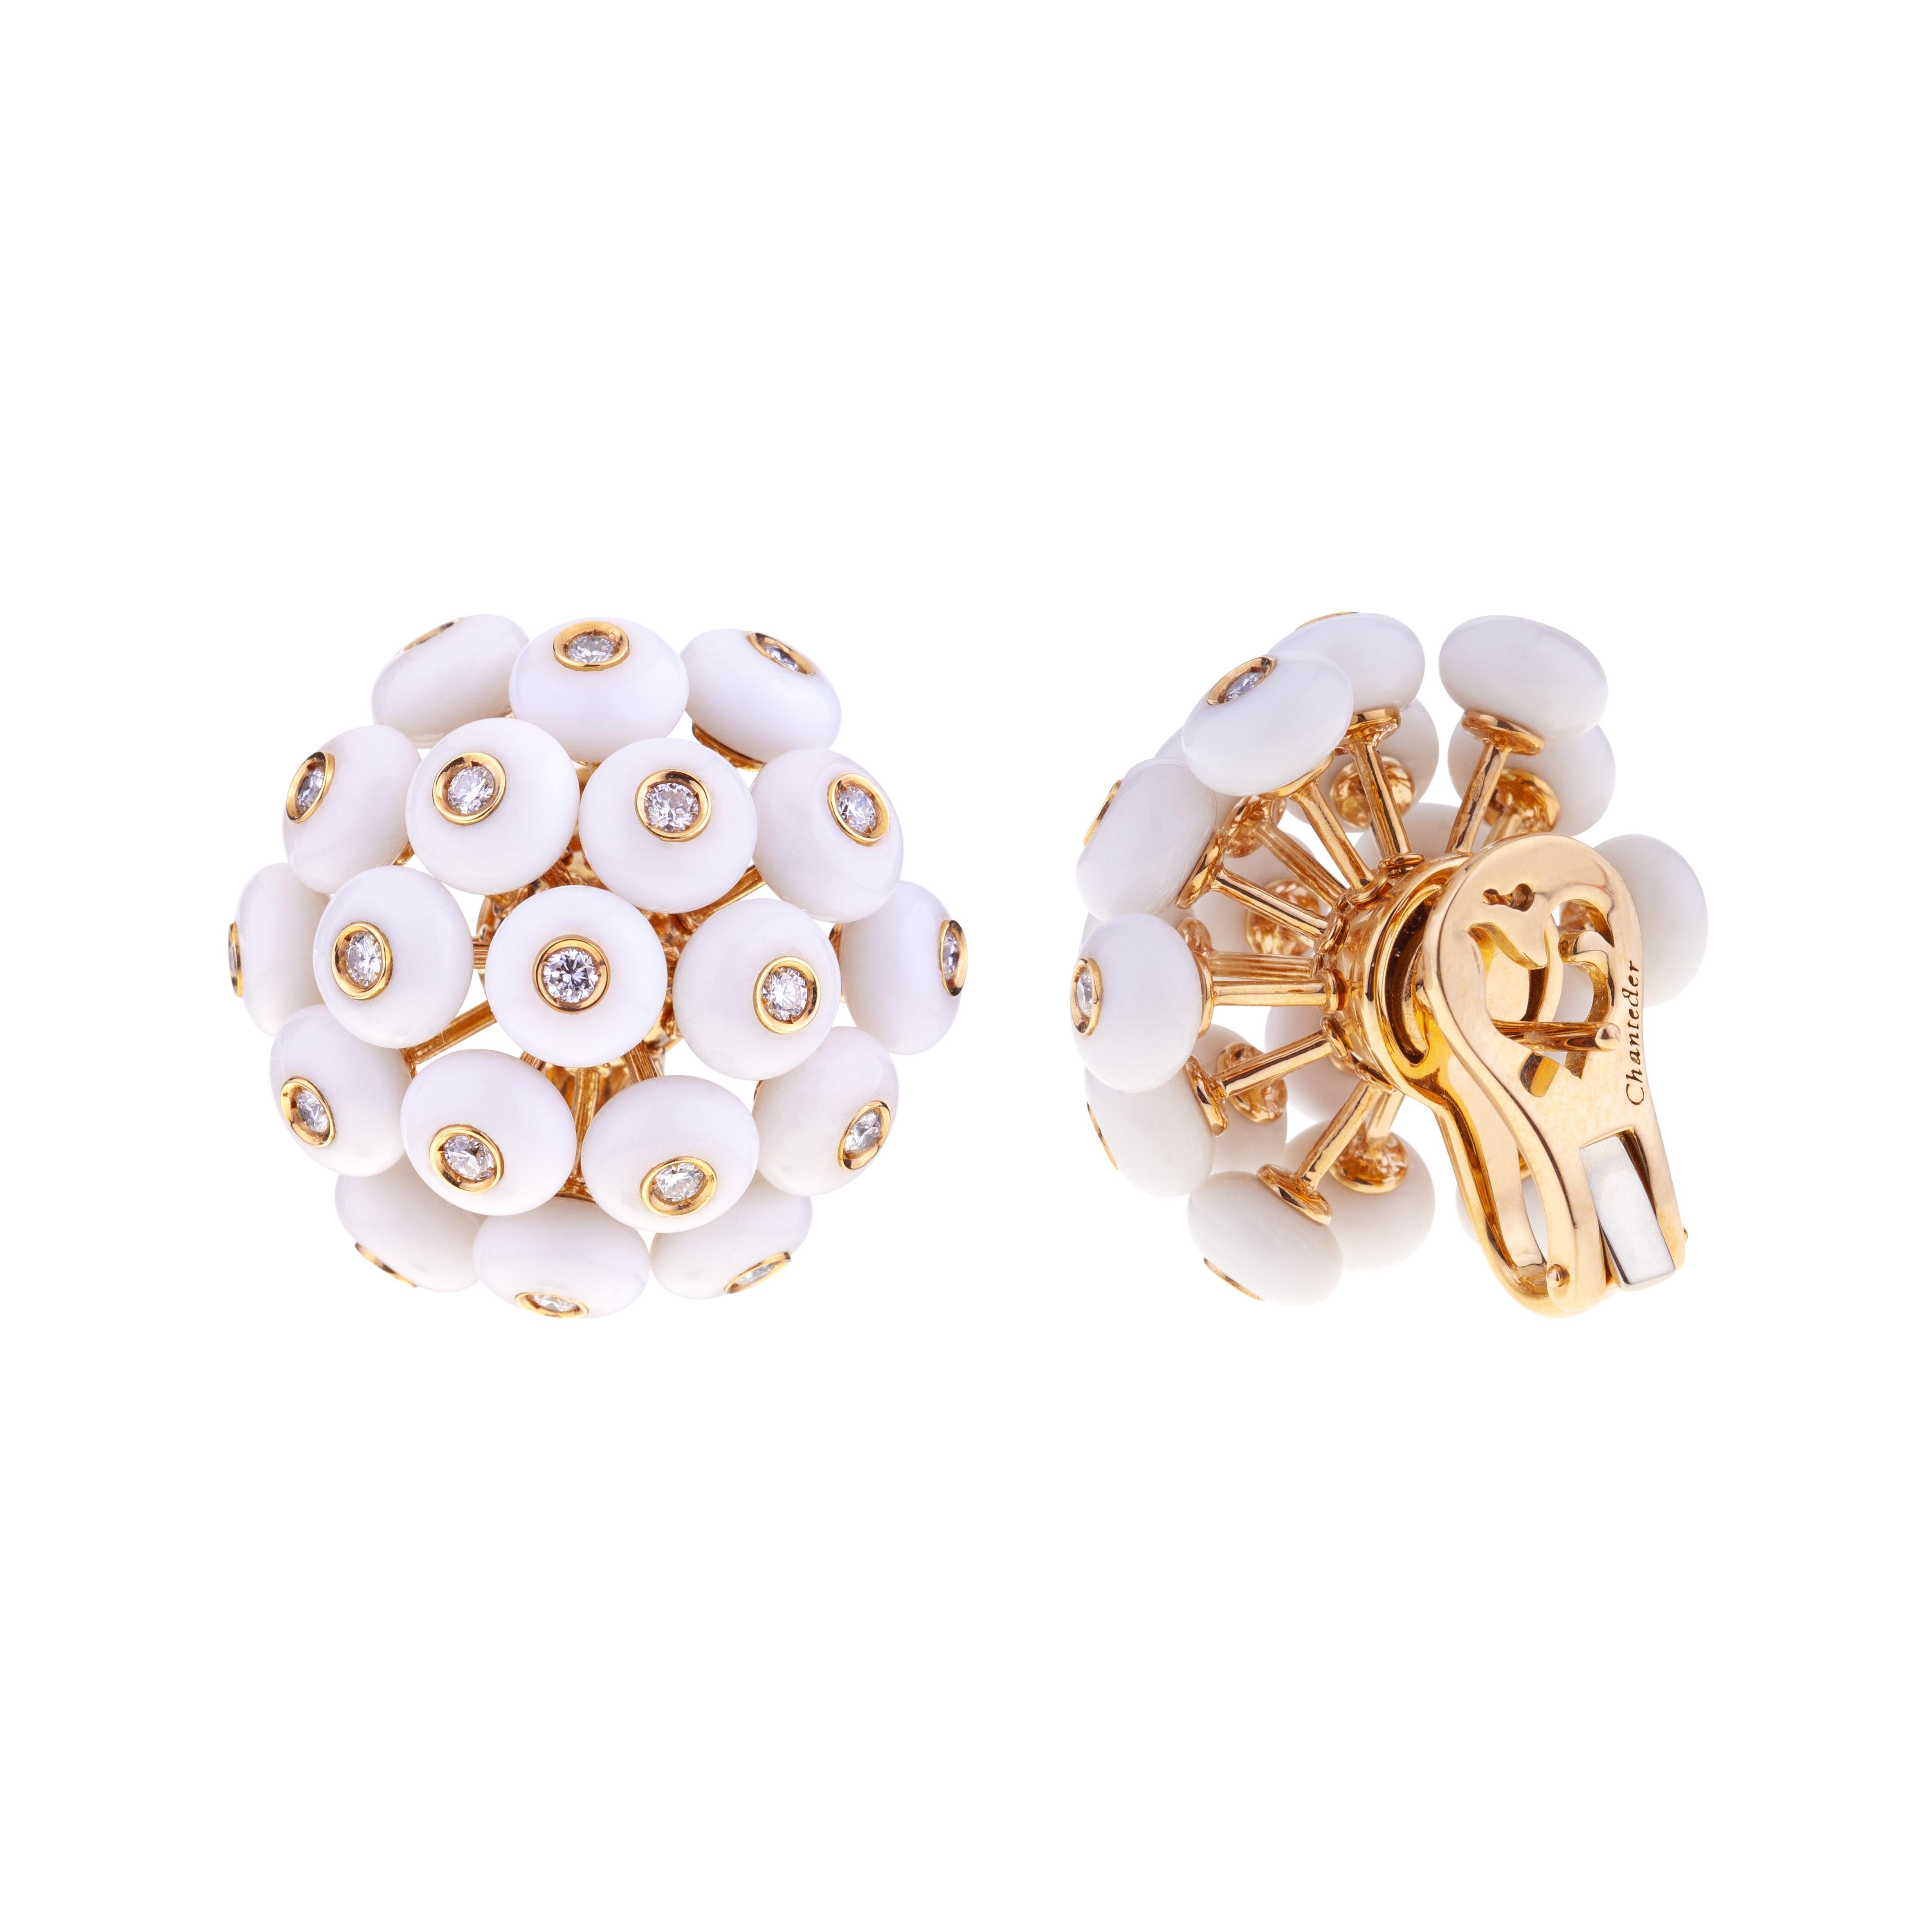 Contemporary Chantecler Dandelion 18 Karat Gold and Kogolong Earrings with Diamonds